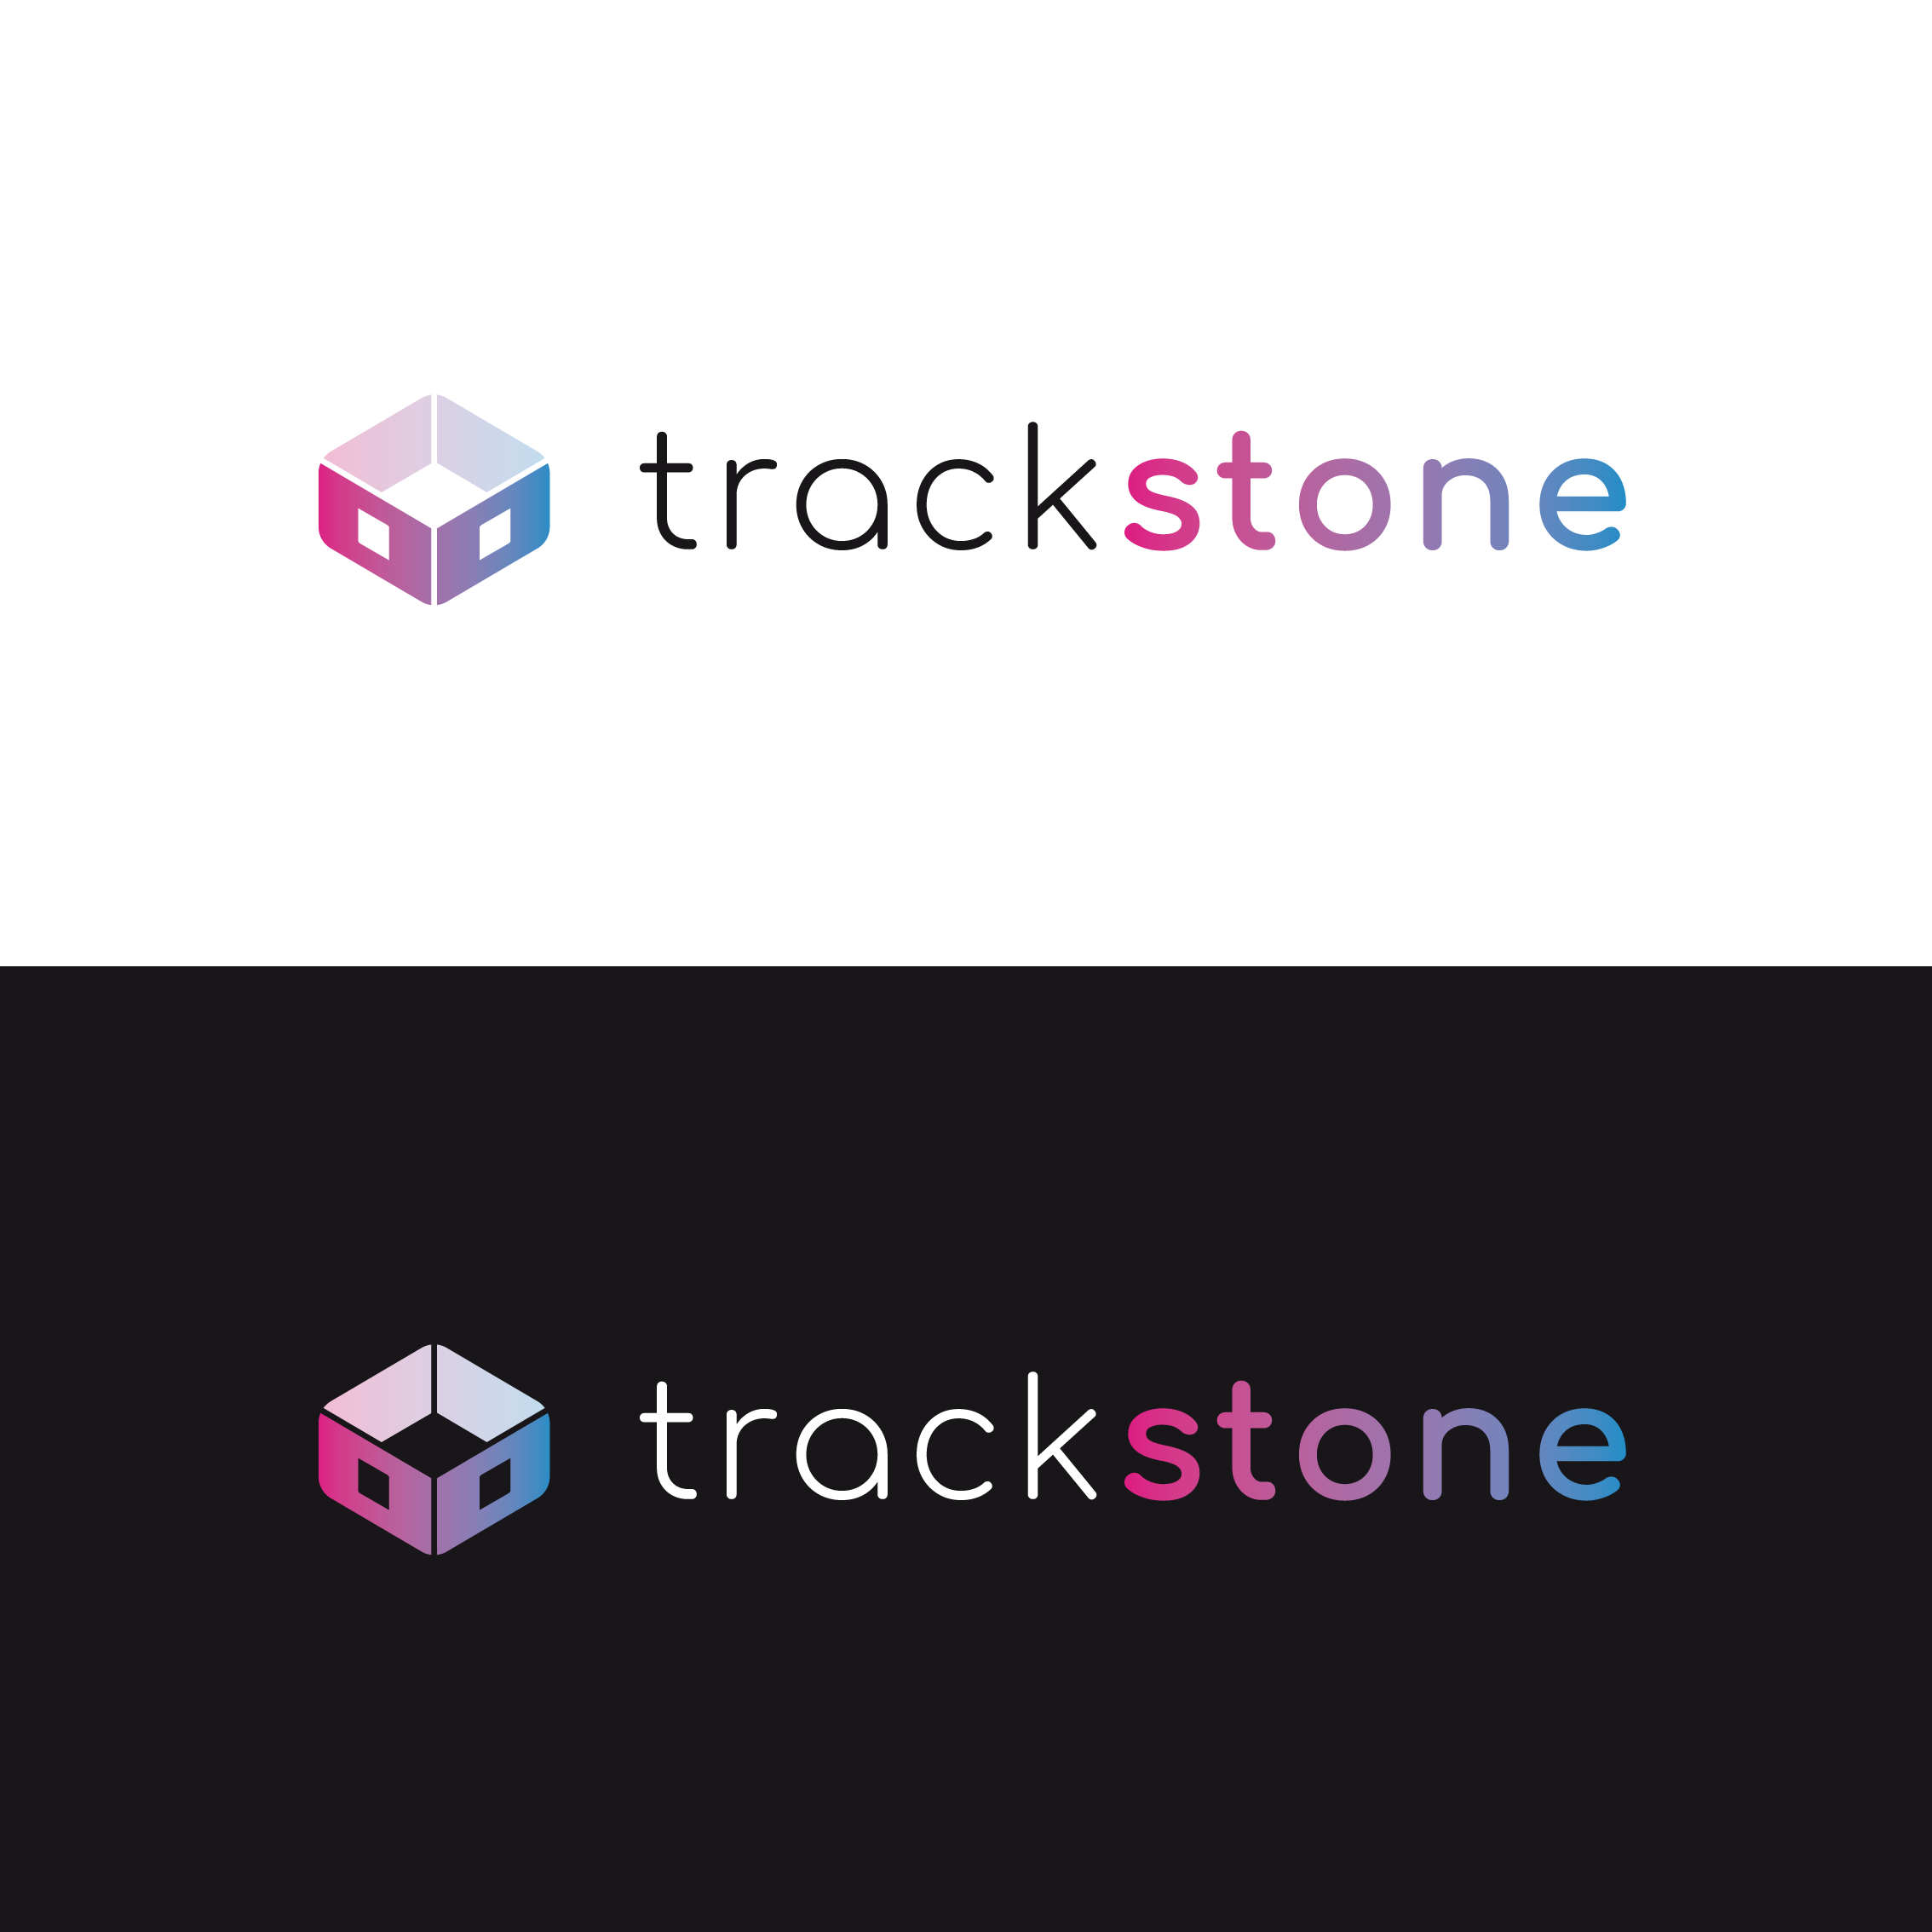 Trackstone - 1 